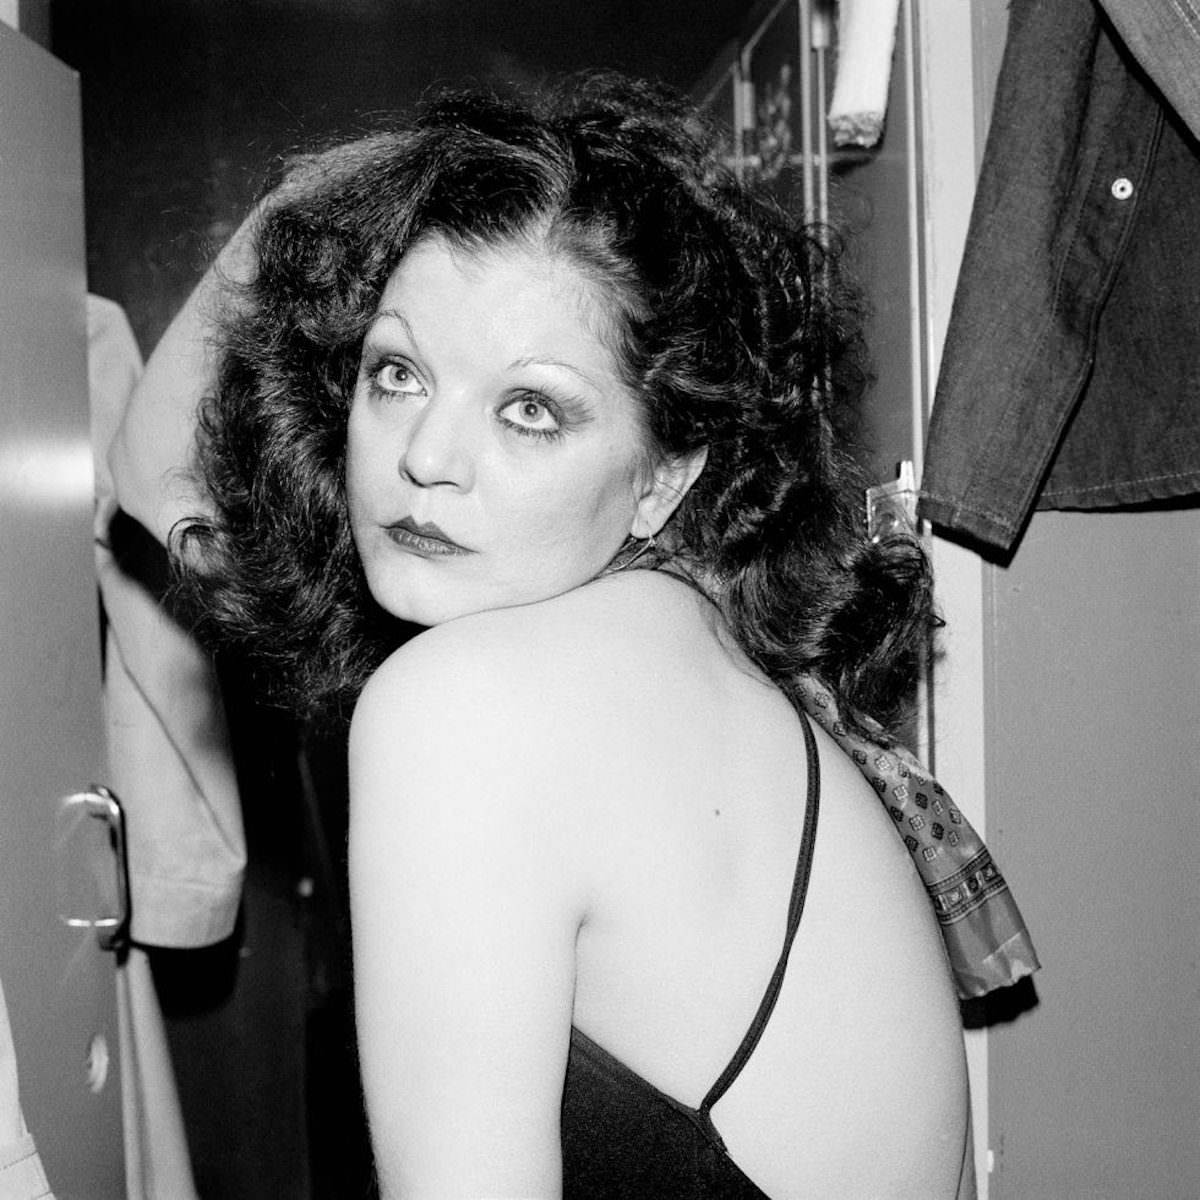 Coli, Playmate Hostess, December 1978